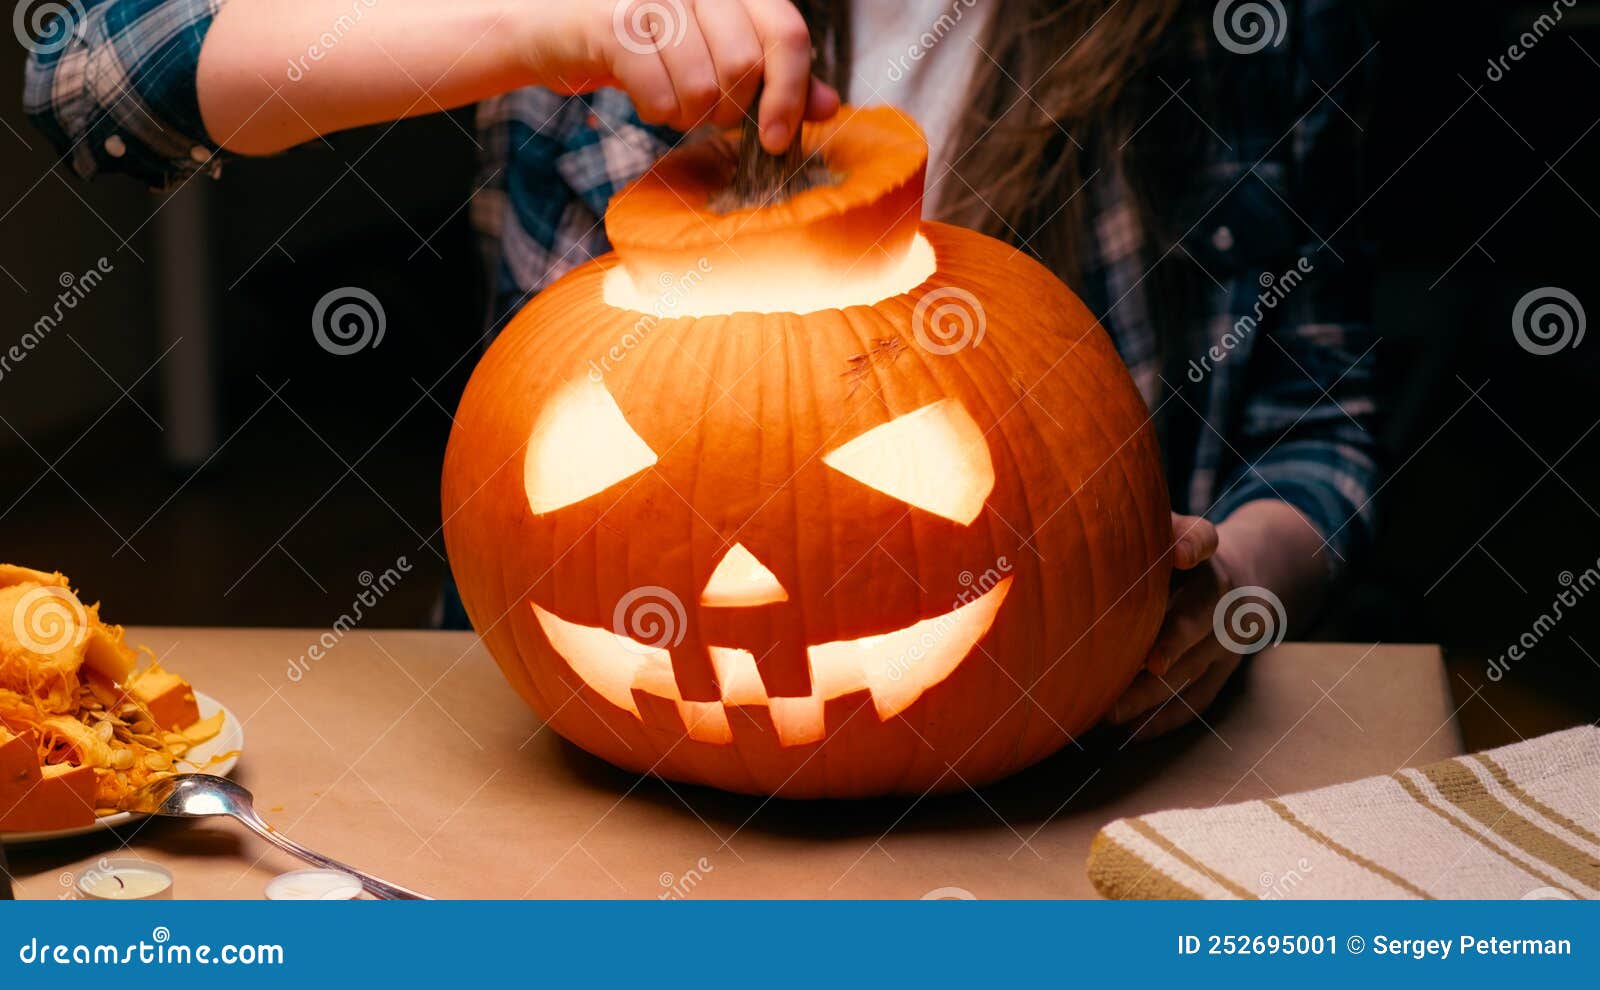 woman carving jack o lantern pumpkin for halloween